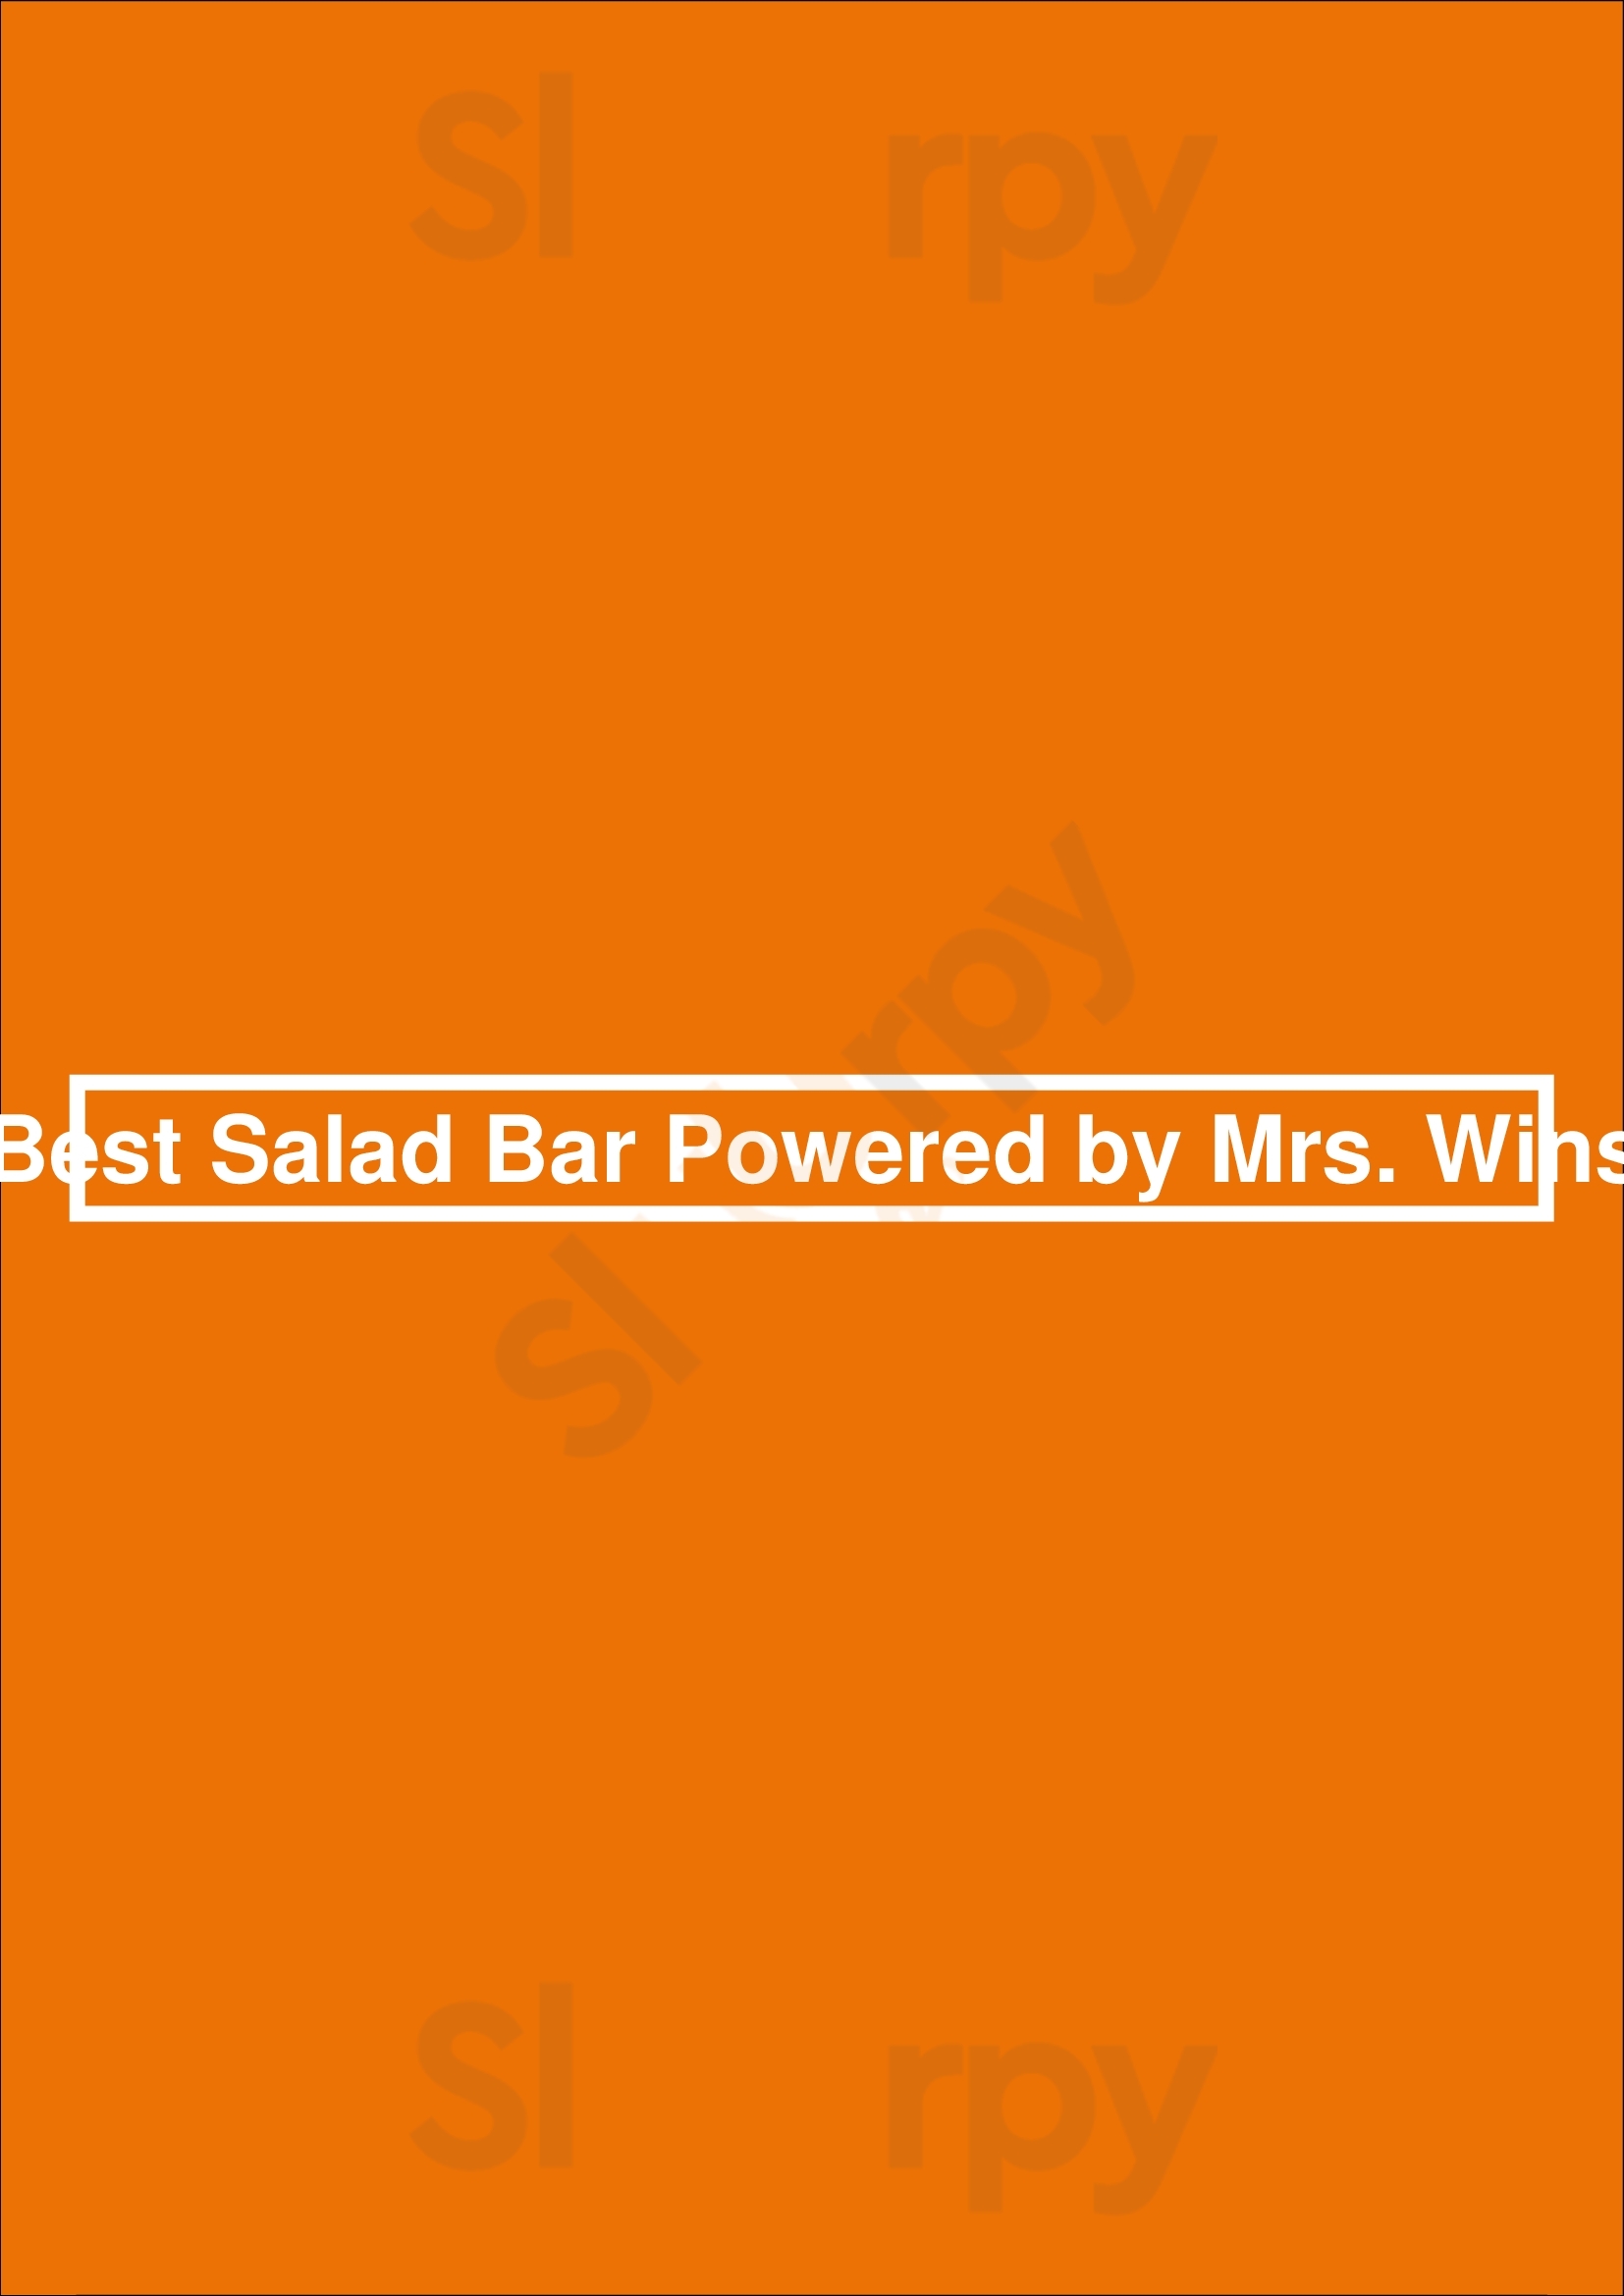 Mrs. Winston's La's Best Salad Bar Los Angeles Menu - 1